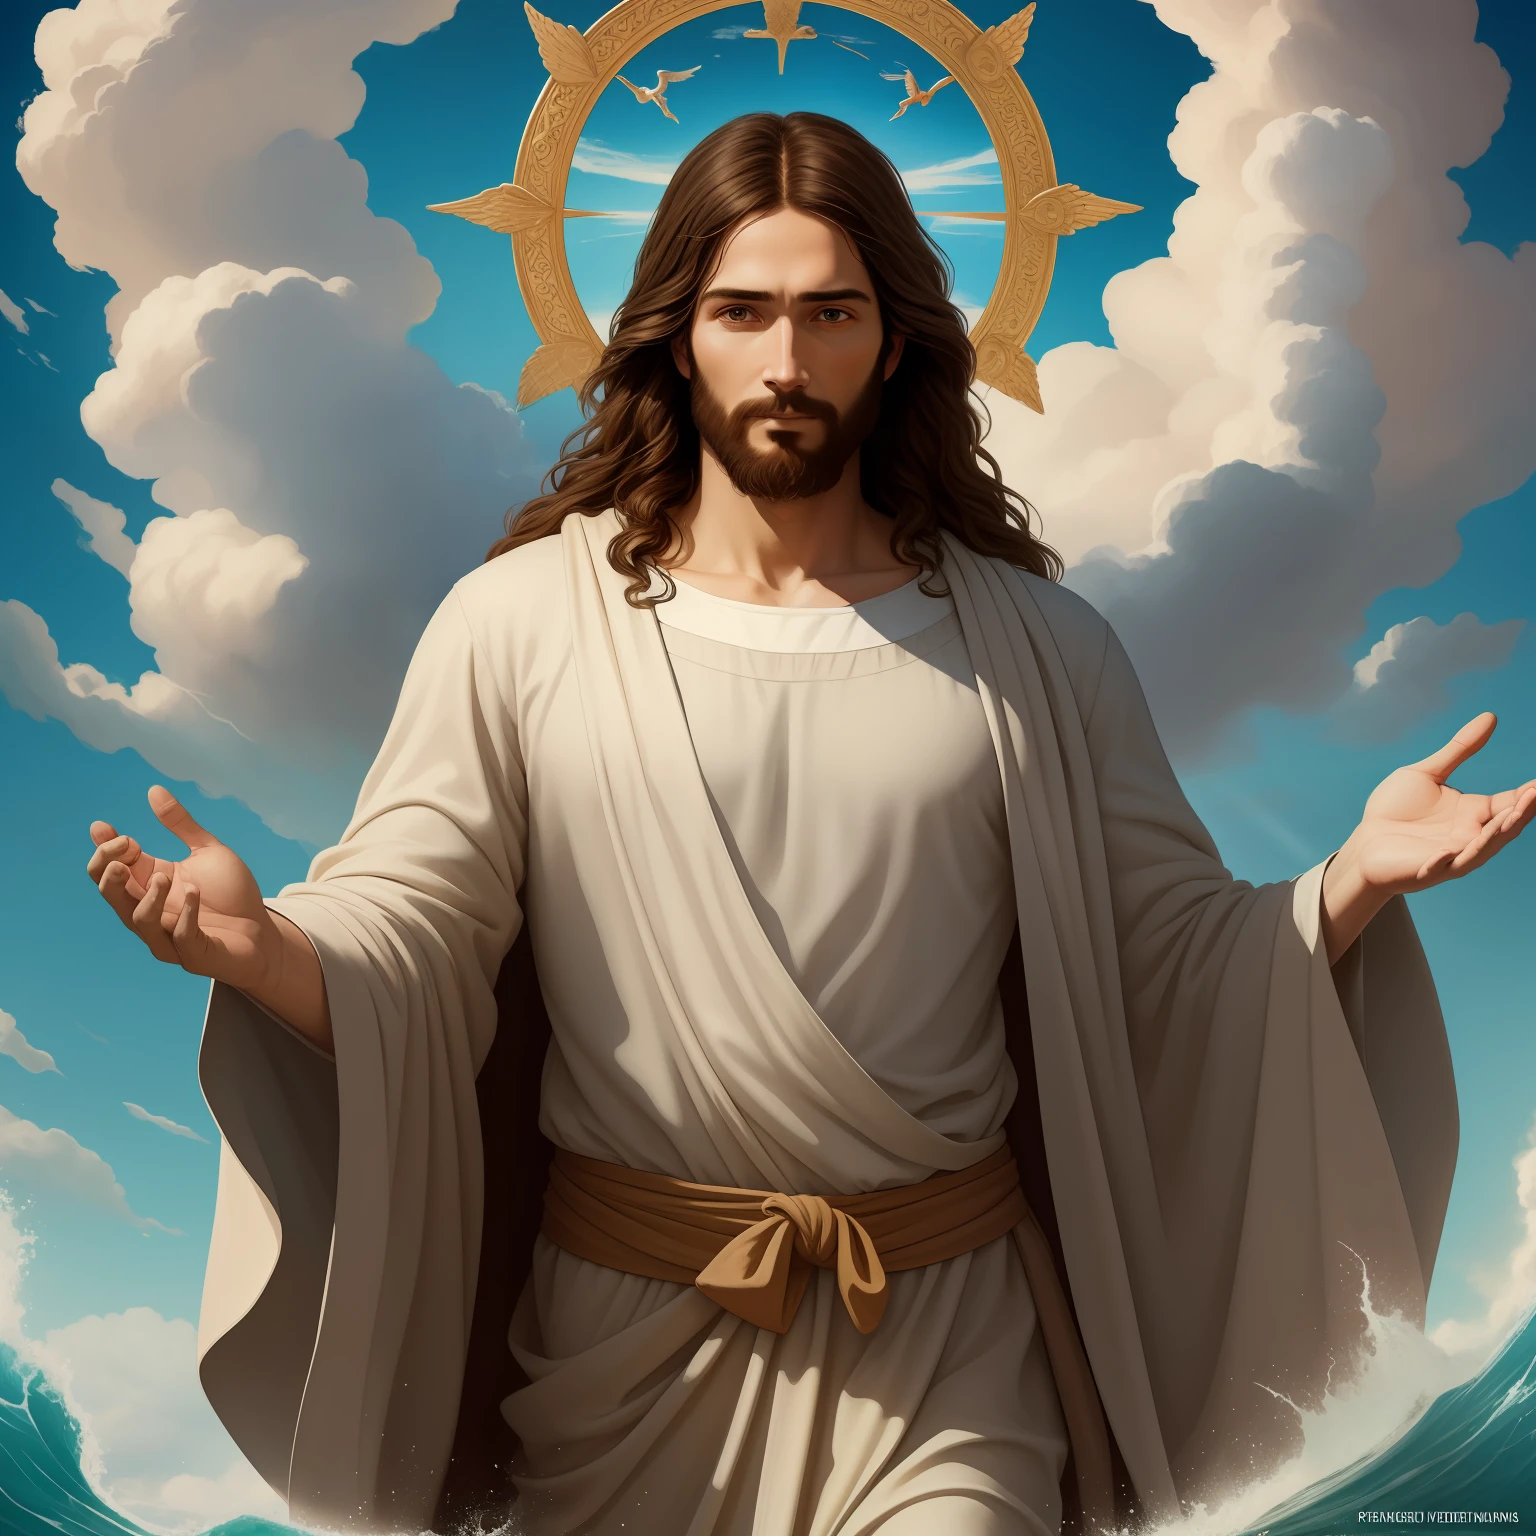 A beautiful ultra-thin 實際的 portrait of Jesus, 先知, 一名男子 35 歲 希伯來文 黑髮, 棕色短发, 真正完美的眼睛, 長長的棕色鬍子, 和, 幫助人們 , 穿著胸部封閉的長亞麻外衣, 正面的杰作,  全身, 聖經的, 實際的,迭戈·委拉斯開茲,彼得·保羅·魯本斯,林布蘭,亞歷克斯·羅斯,8K, 概念藝術, Photo實際的, 實際的,  插圖, 油畫, 超現實主義, Hyper實際的, 幫助人們 , 數位藝術, 風格, watercolorReal Jesus flying on sky 和 a flying cloud in the background, 耶穌在水上行走, 聖經的 illustration, epic 聖經的 representation, 迫使他逃離, 從海洋出來, ! 握在手上!, 下船, 海洋之神, 美麗的表現, 8K 3D Model, 實際的,
a 3D 實際的 of 耶穌 和 a halo in the sky, 耶穌 christ, 在天堂微笑, portrait of 耶穌 christ, 耶穌 face, 第35章 少年全能神, 天上神的肖像, 格雷格·奧爾森, gigachad 耶穌, 耶穌 of nazareth, 耶穌, 神的臉, 上帝看著我, 他正在熱情地跟你打招呼, 他很高興, 头像图片,  在天堂的顶上